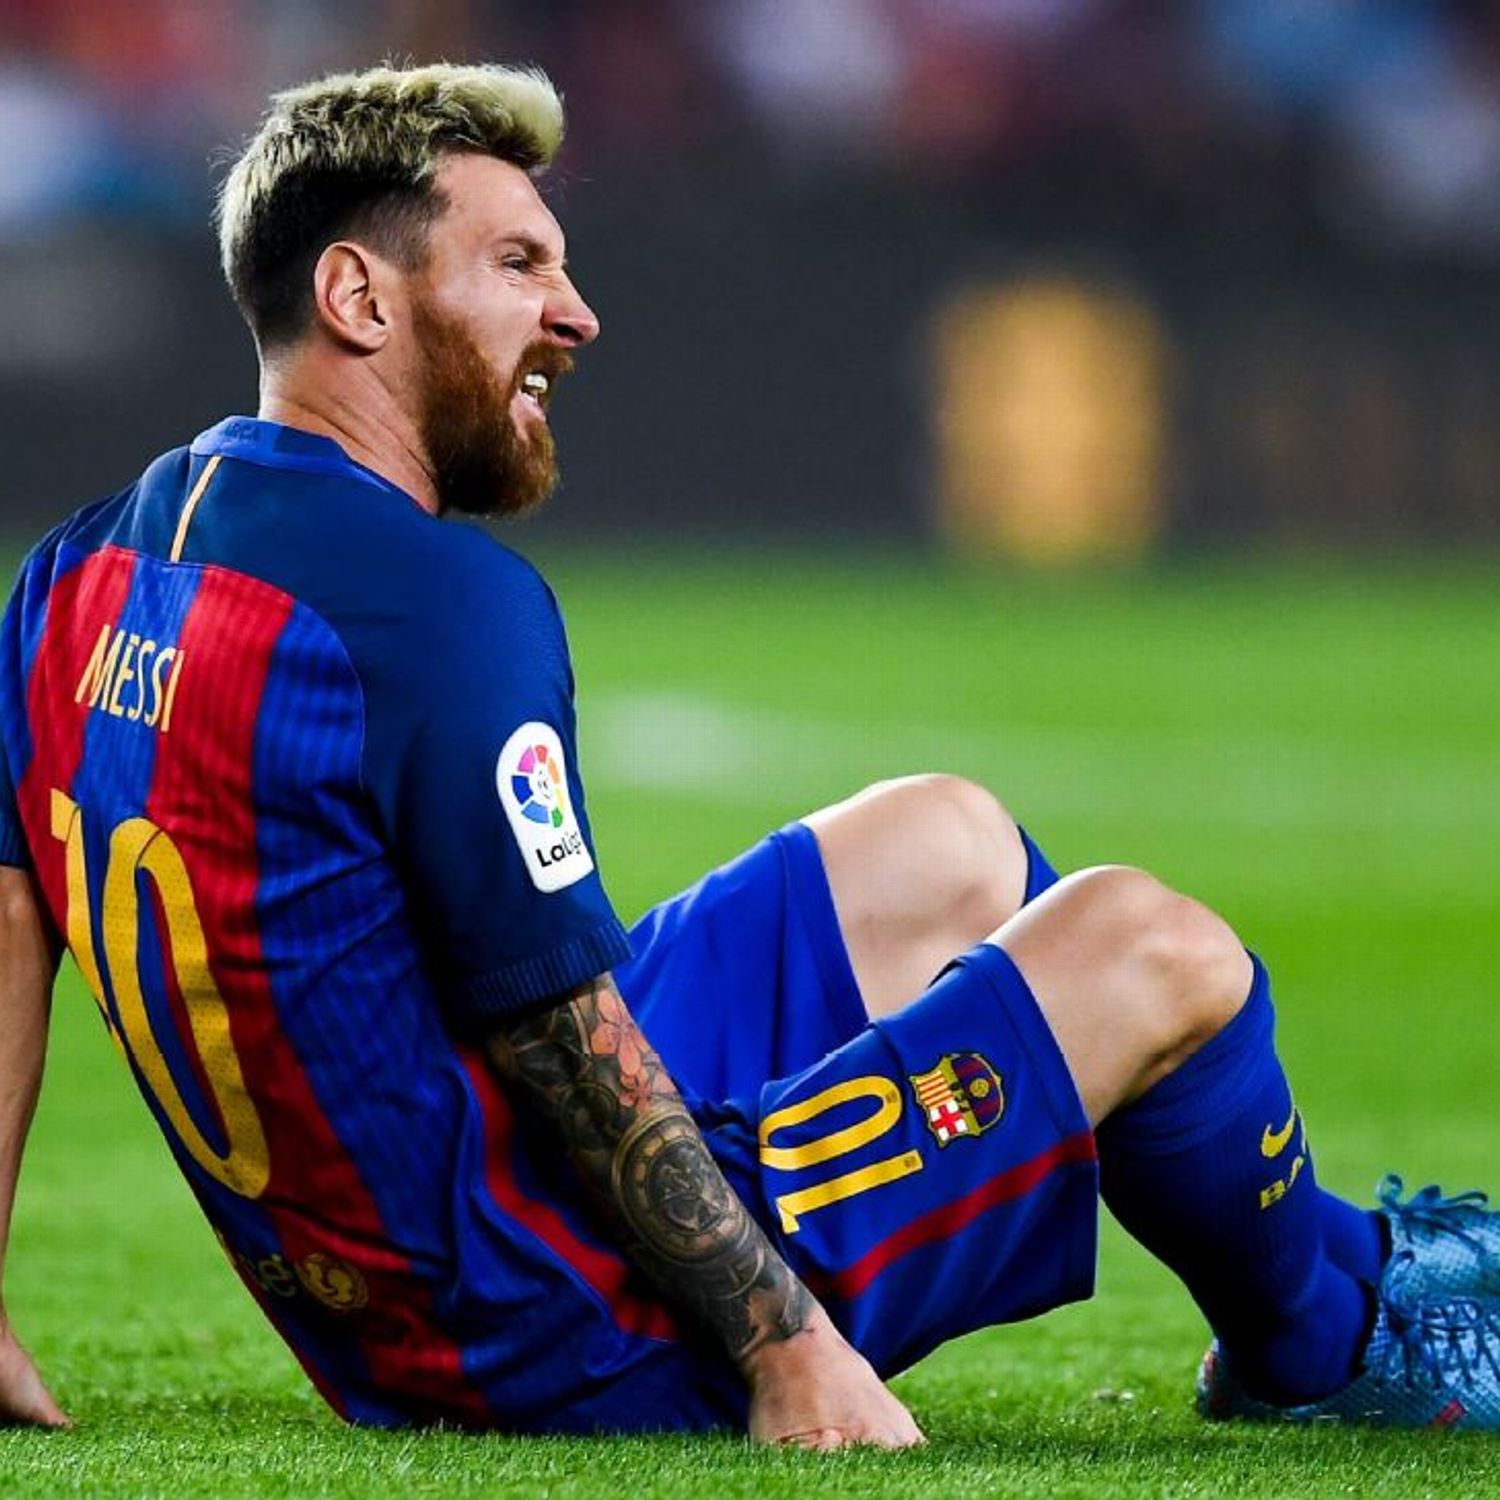 Barcelona's Lionel Messi set to return from injury vs Deportivo La Coruna - ESPN FC